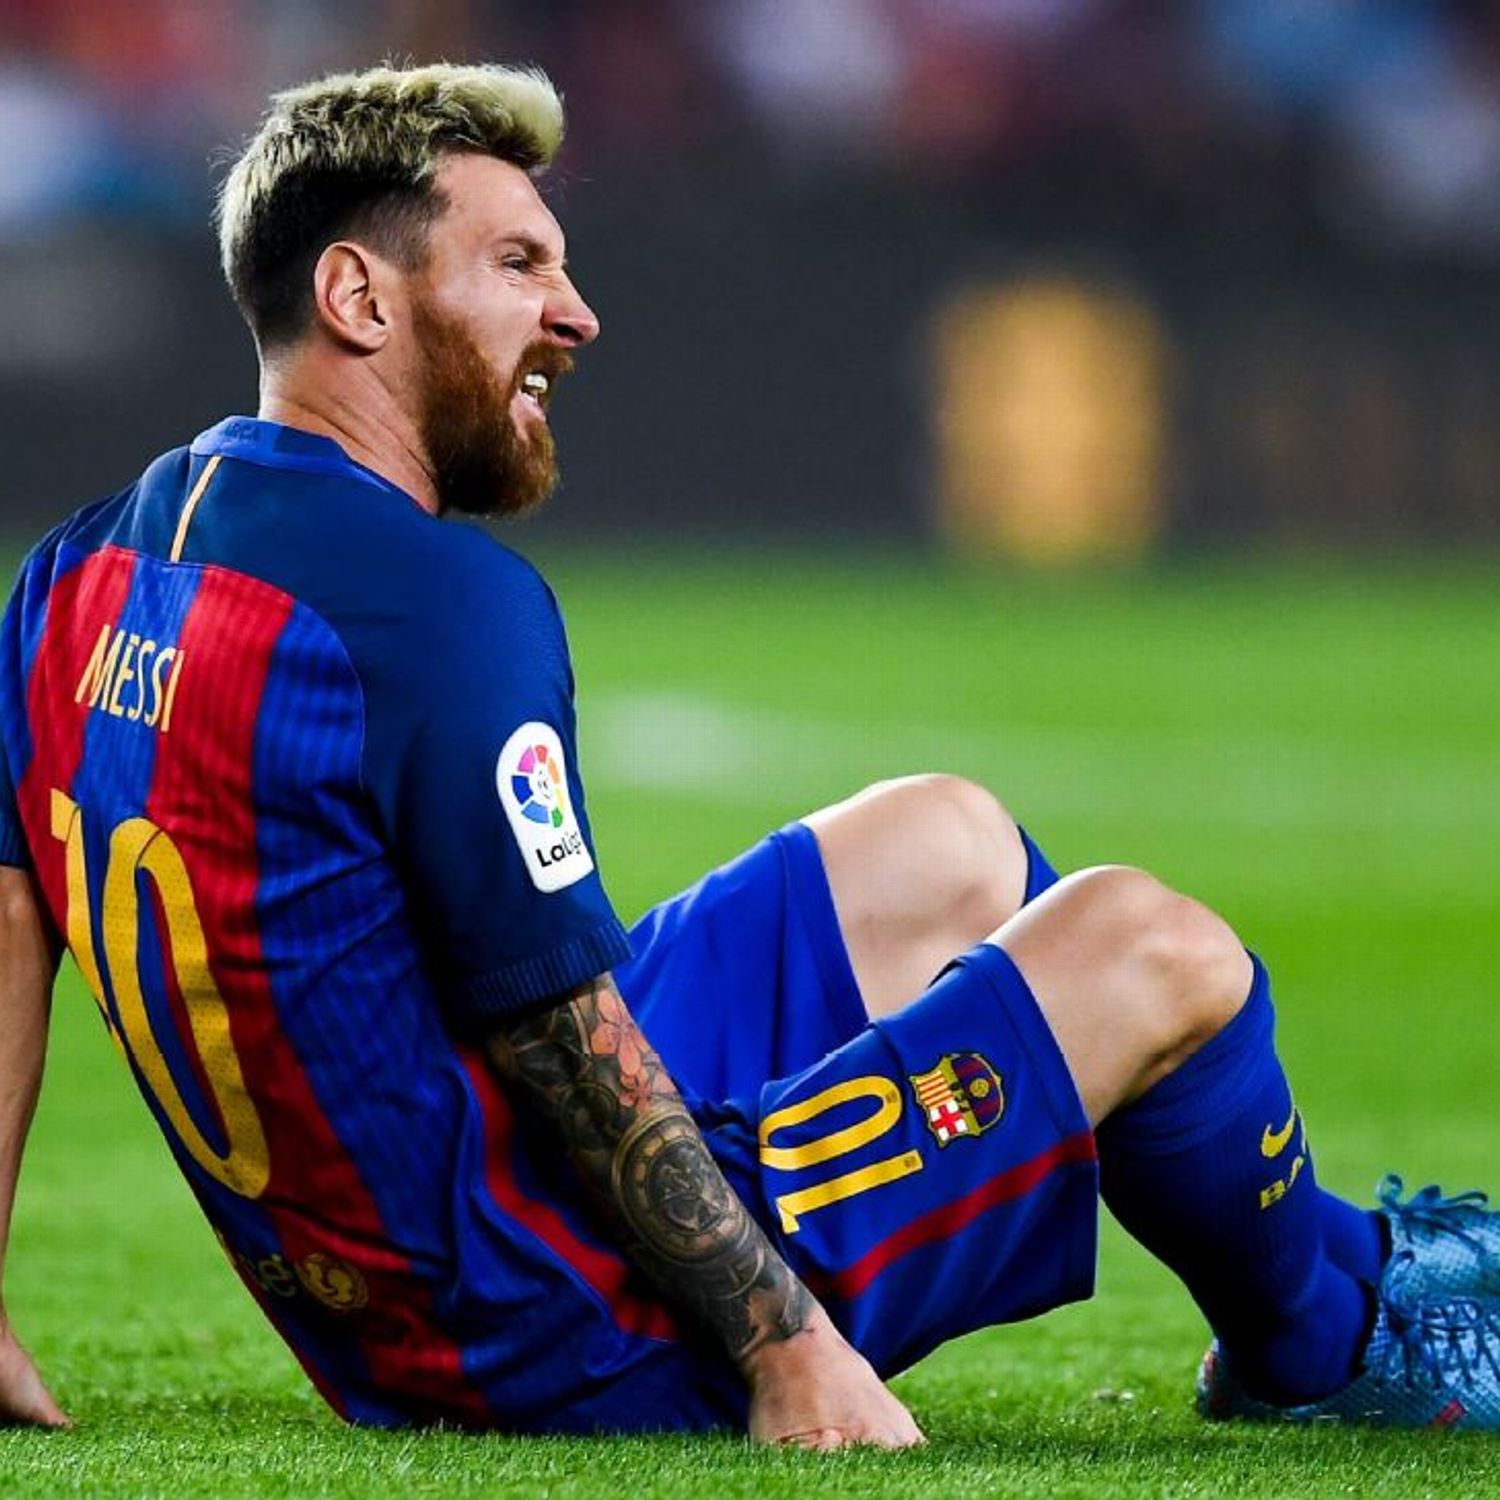 Barcelona's Lionel Messi set to return from injury vs Deportivo La Coruna - ESPN FC